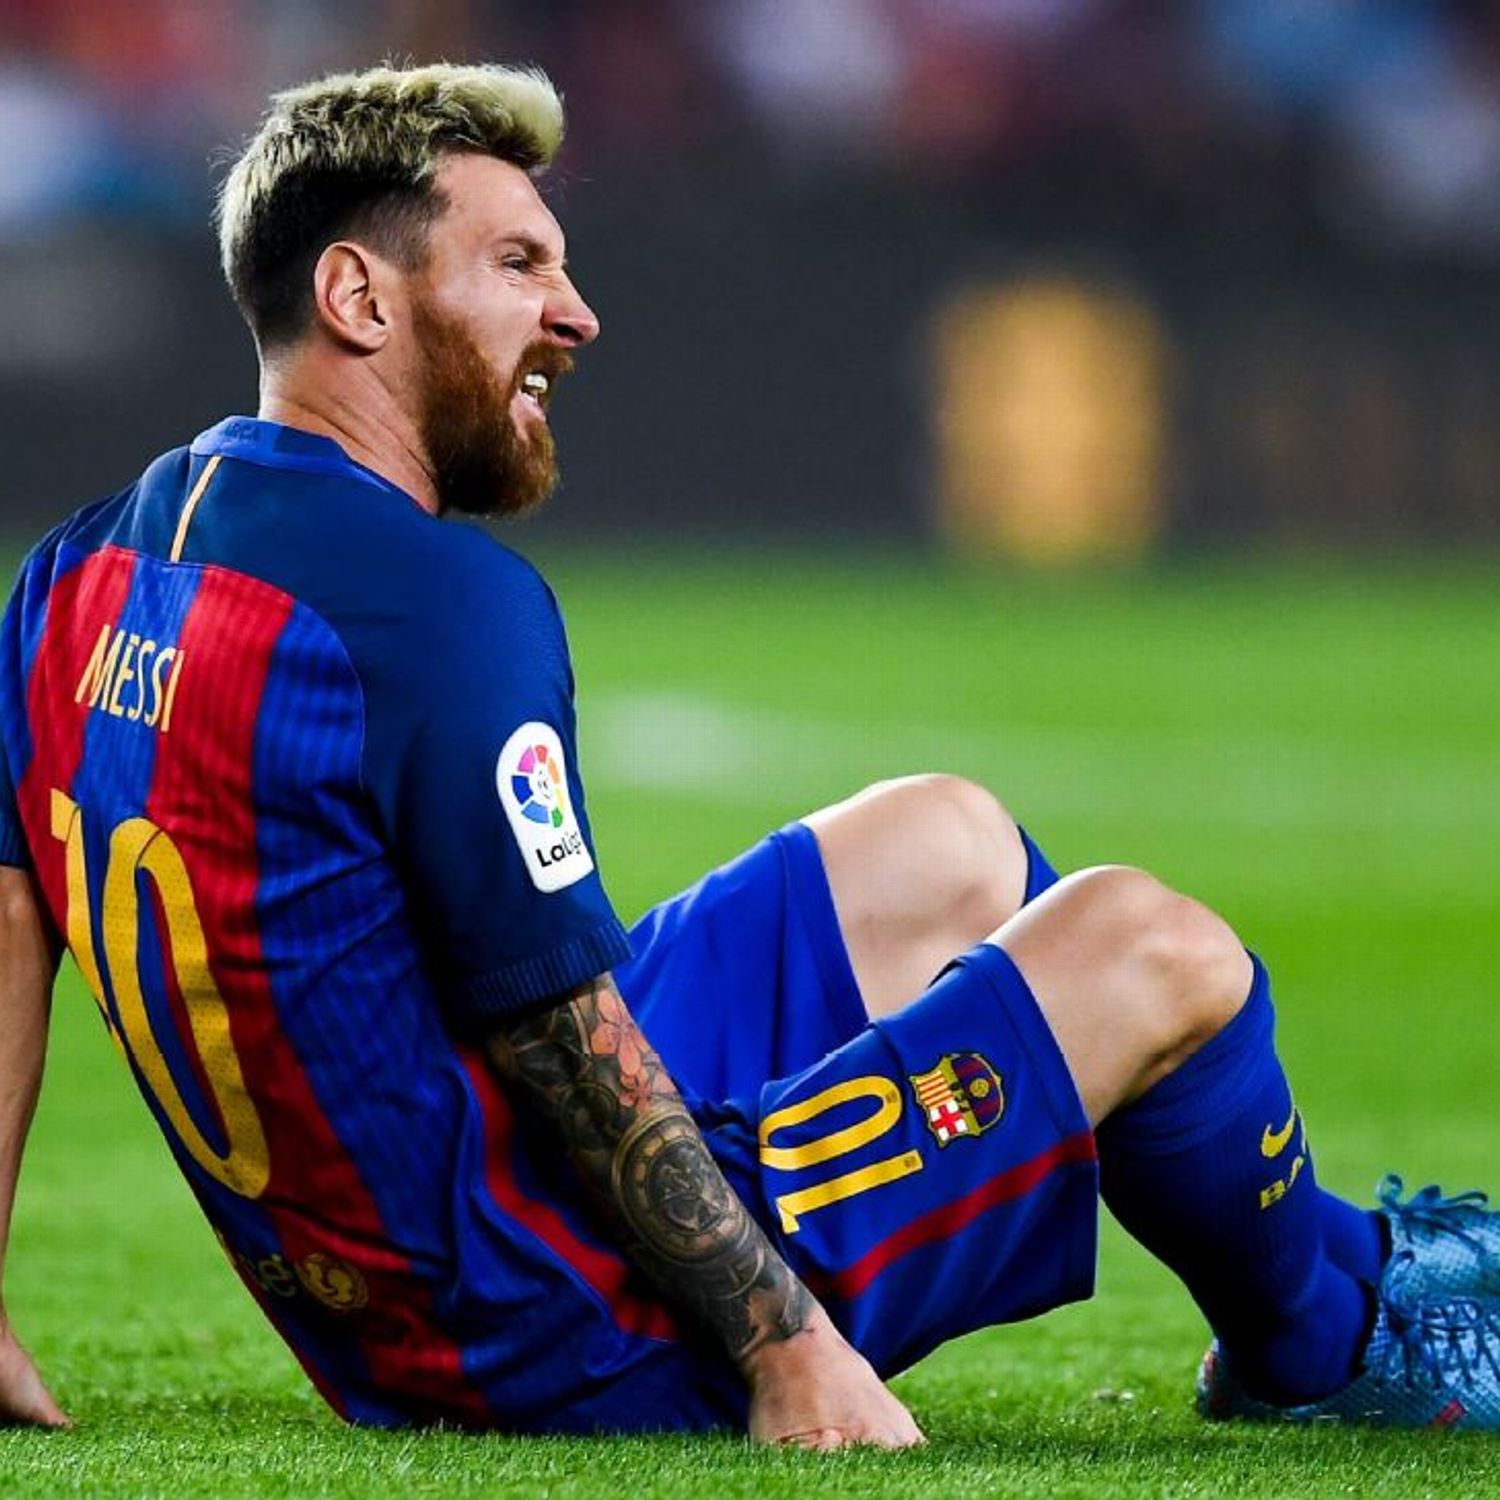 Barcelona's Lionel Messi set to return from injury vs Deportivo La Coruna - ESPN FC